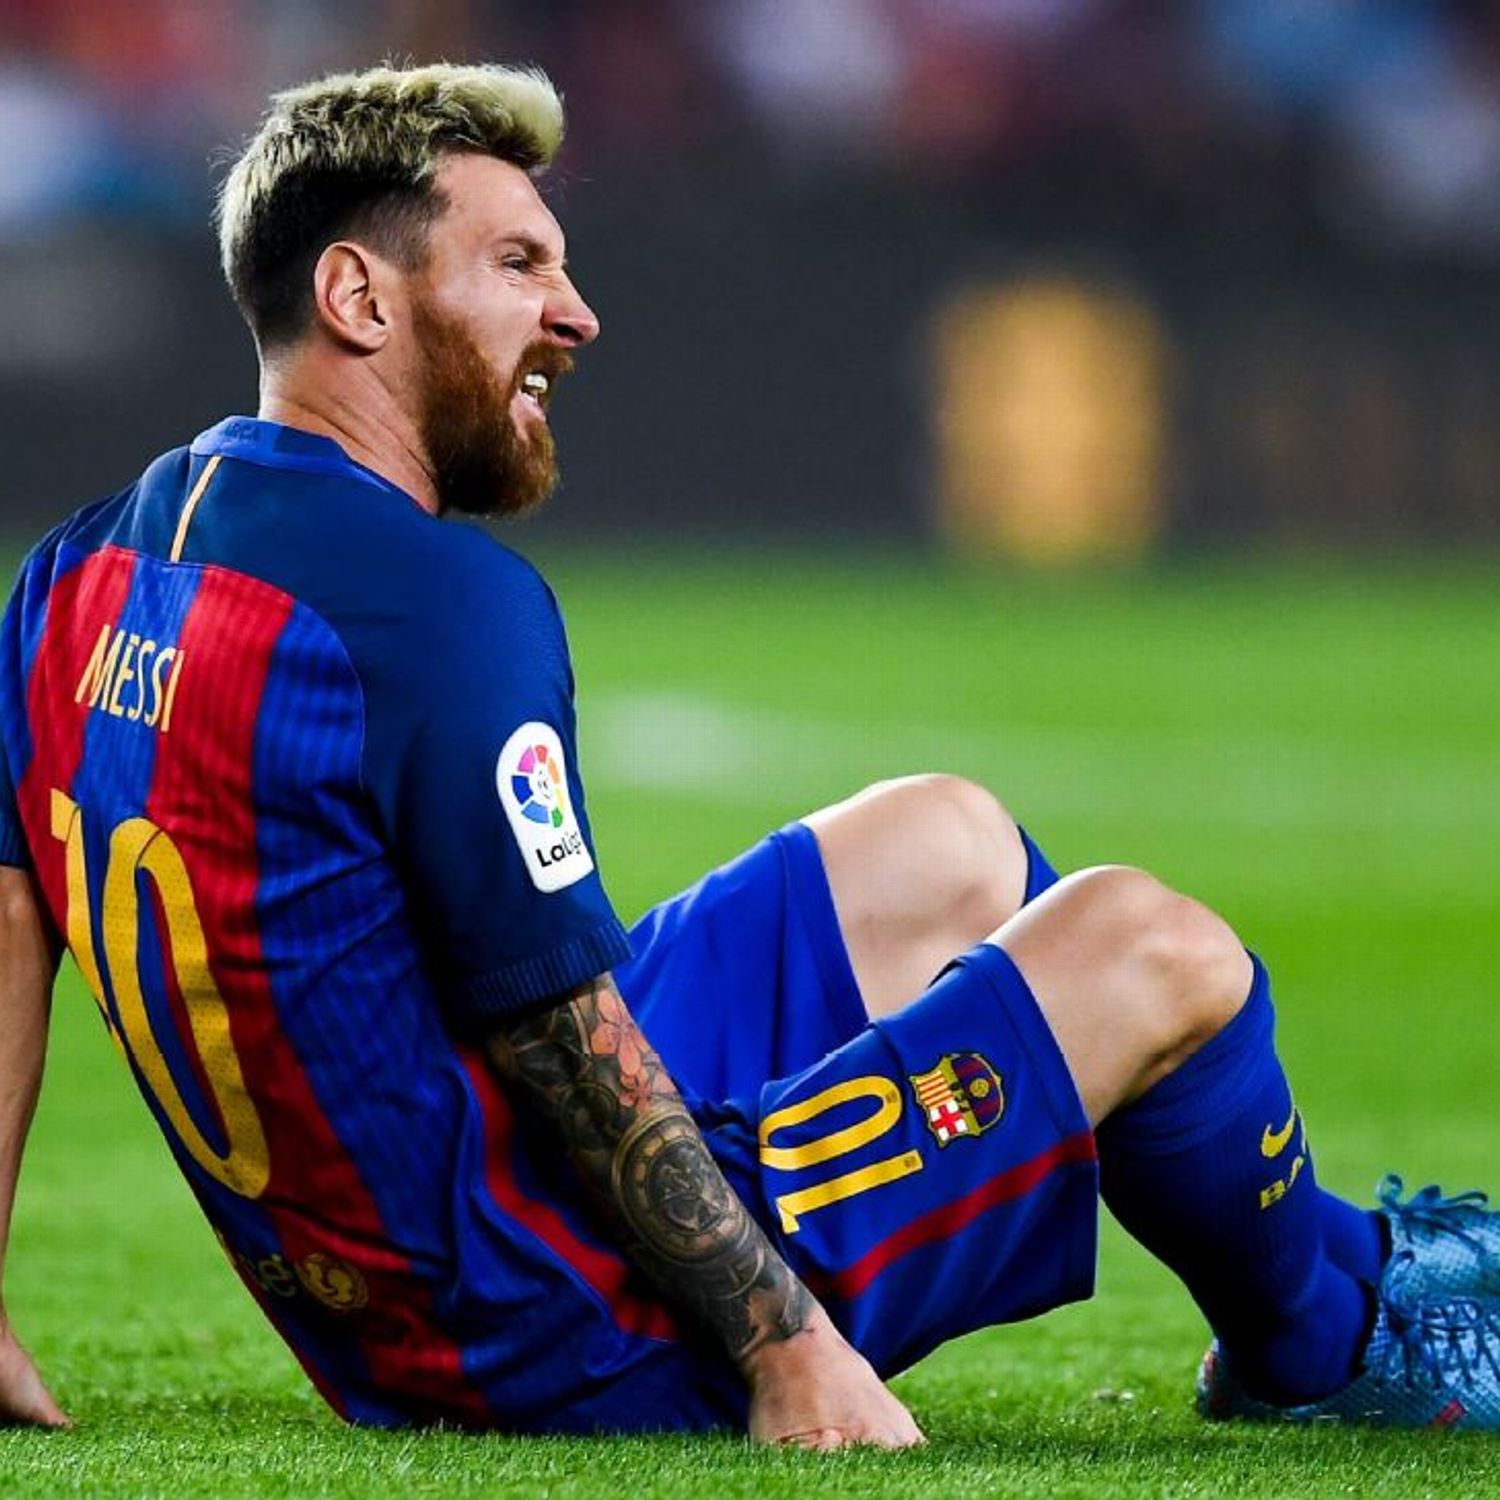 Barcelona's Lionel Messi set to return from injury vs Deportivo La Coruna - ESPN FC